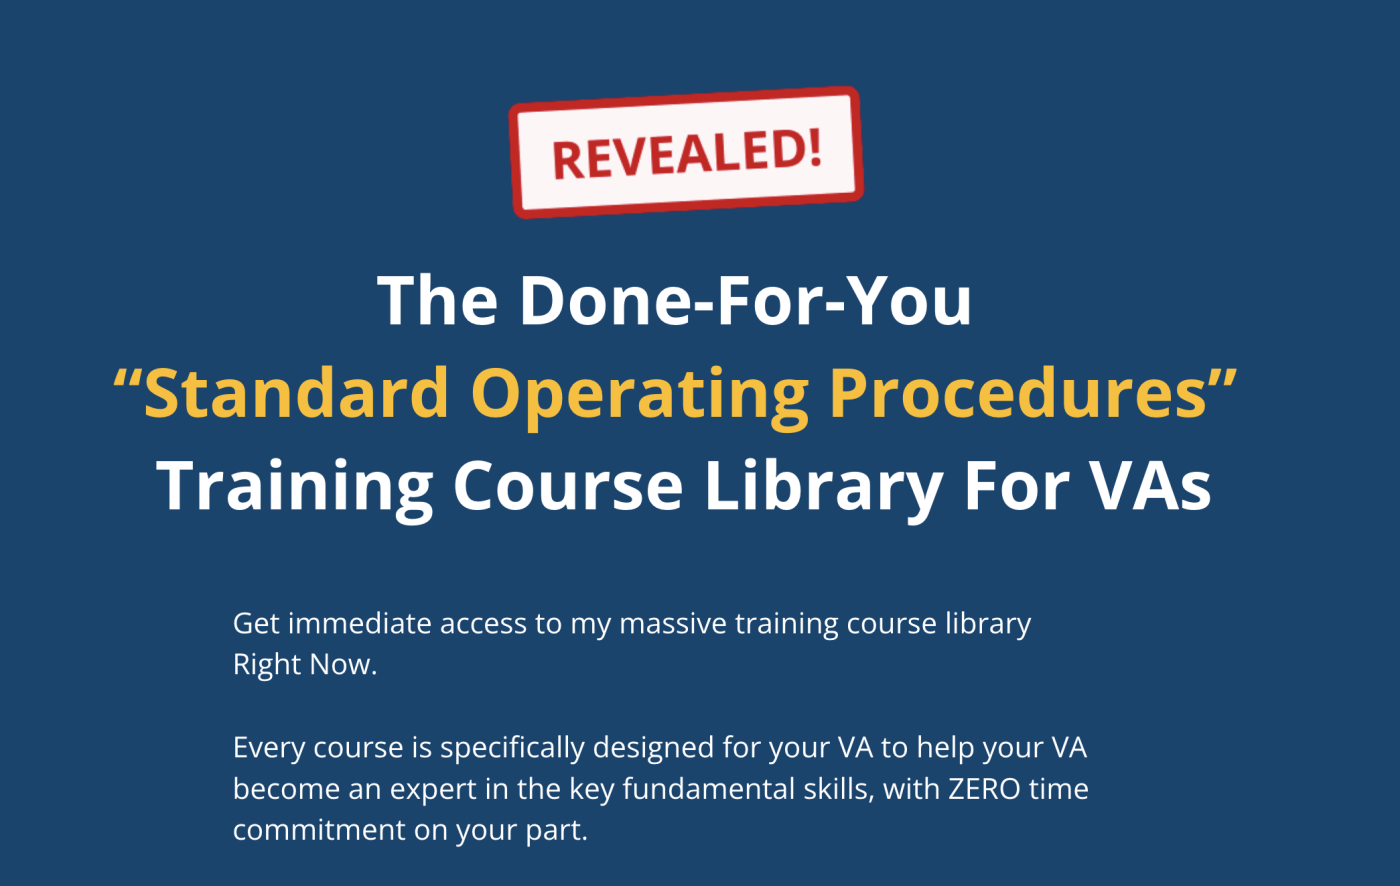 John Jonas – VA Standard Operating Procedure Training Course